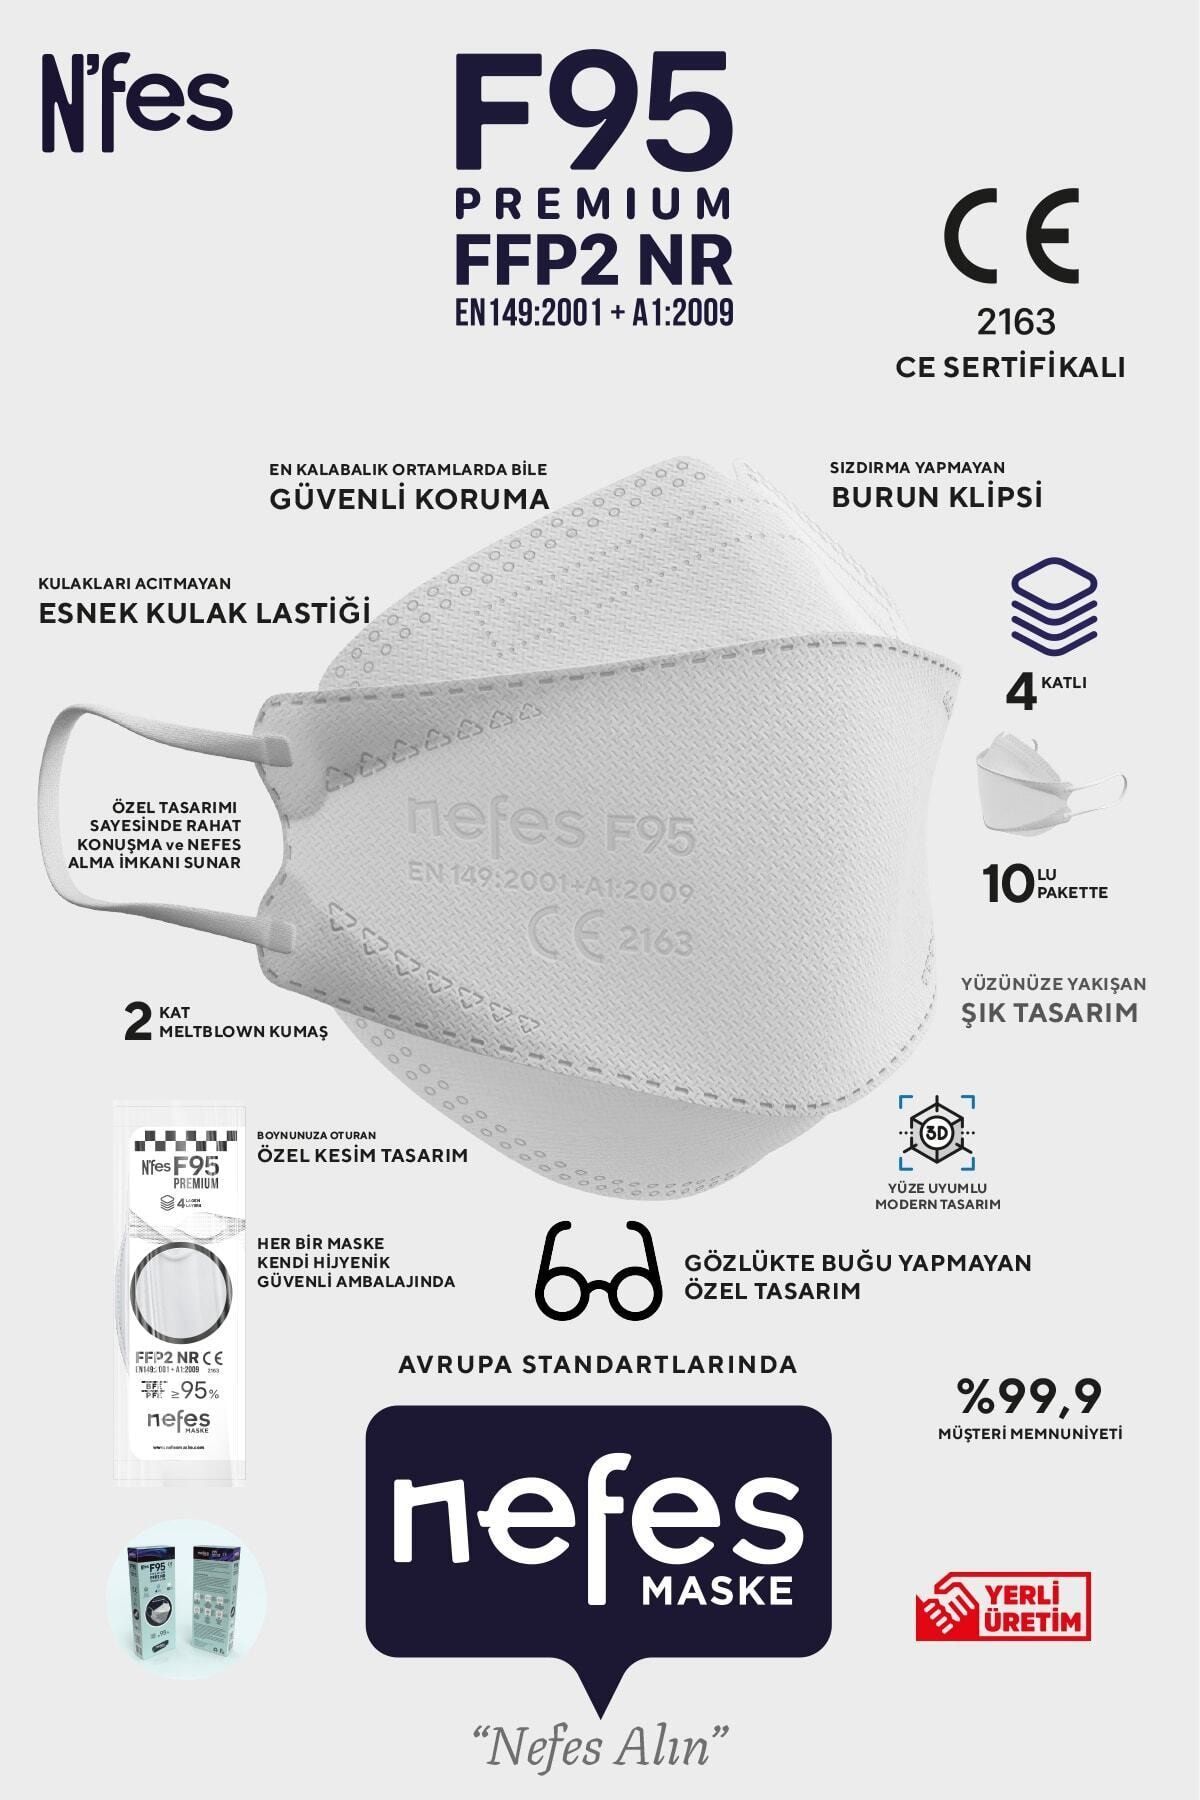 nefes maske N'fes F95 Premium Kore Tipi Beyaz N95(kf94) Maske 1 Kutu 10 Adet